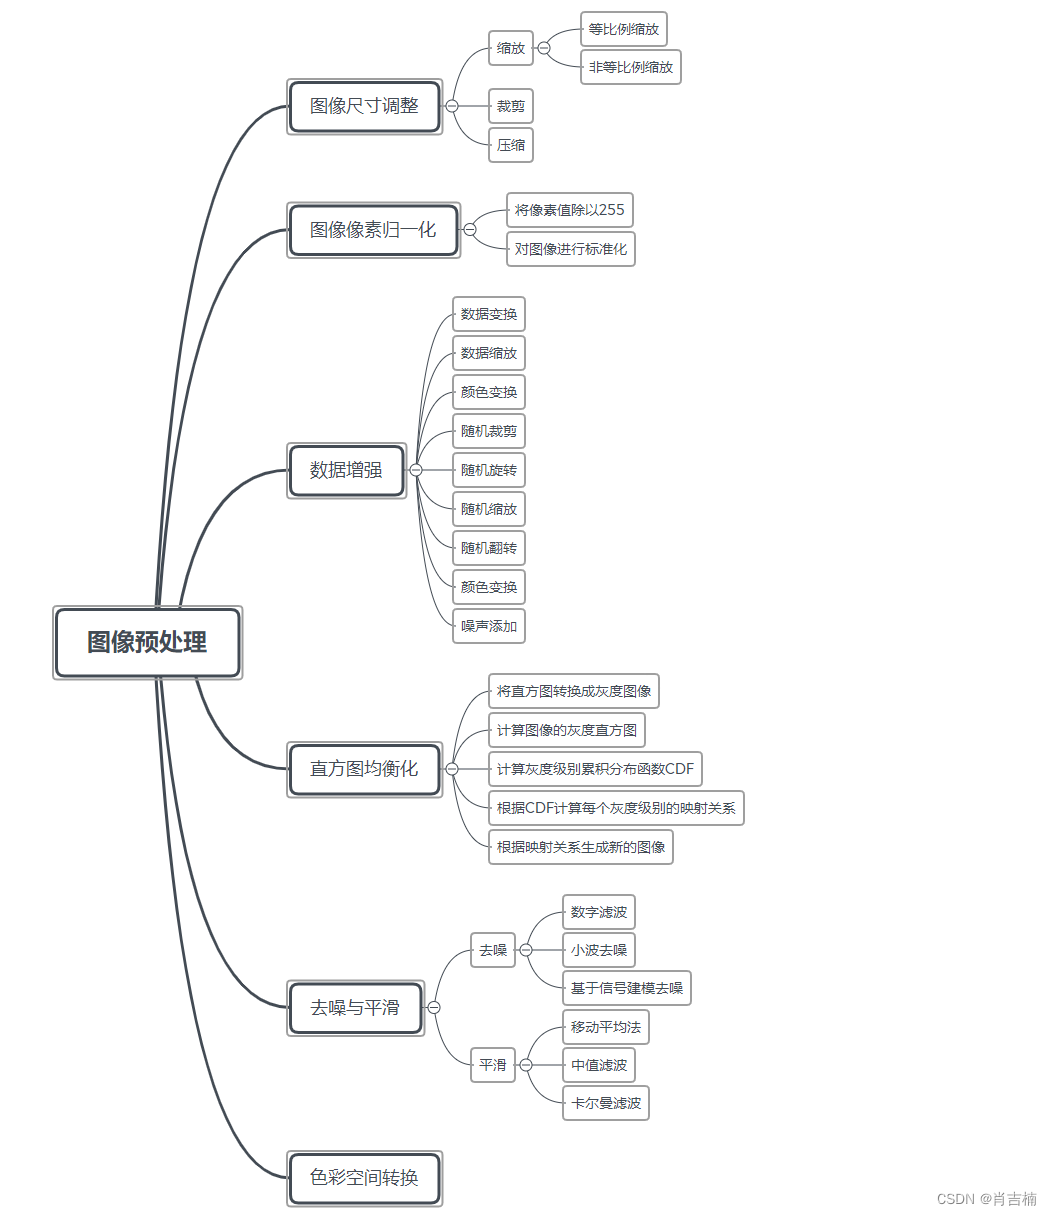 Image preprocessing framework diagram